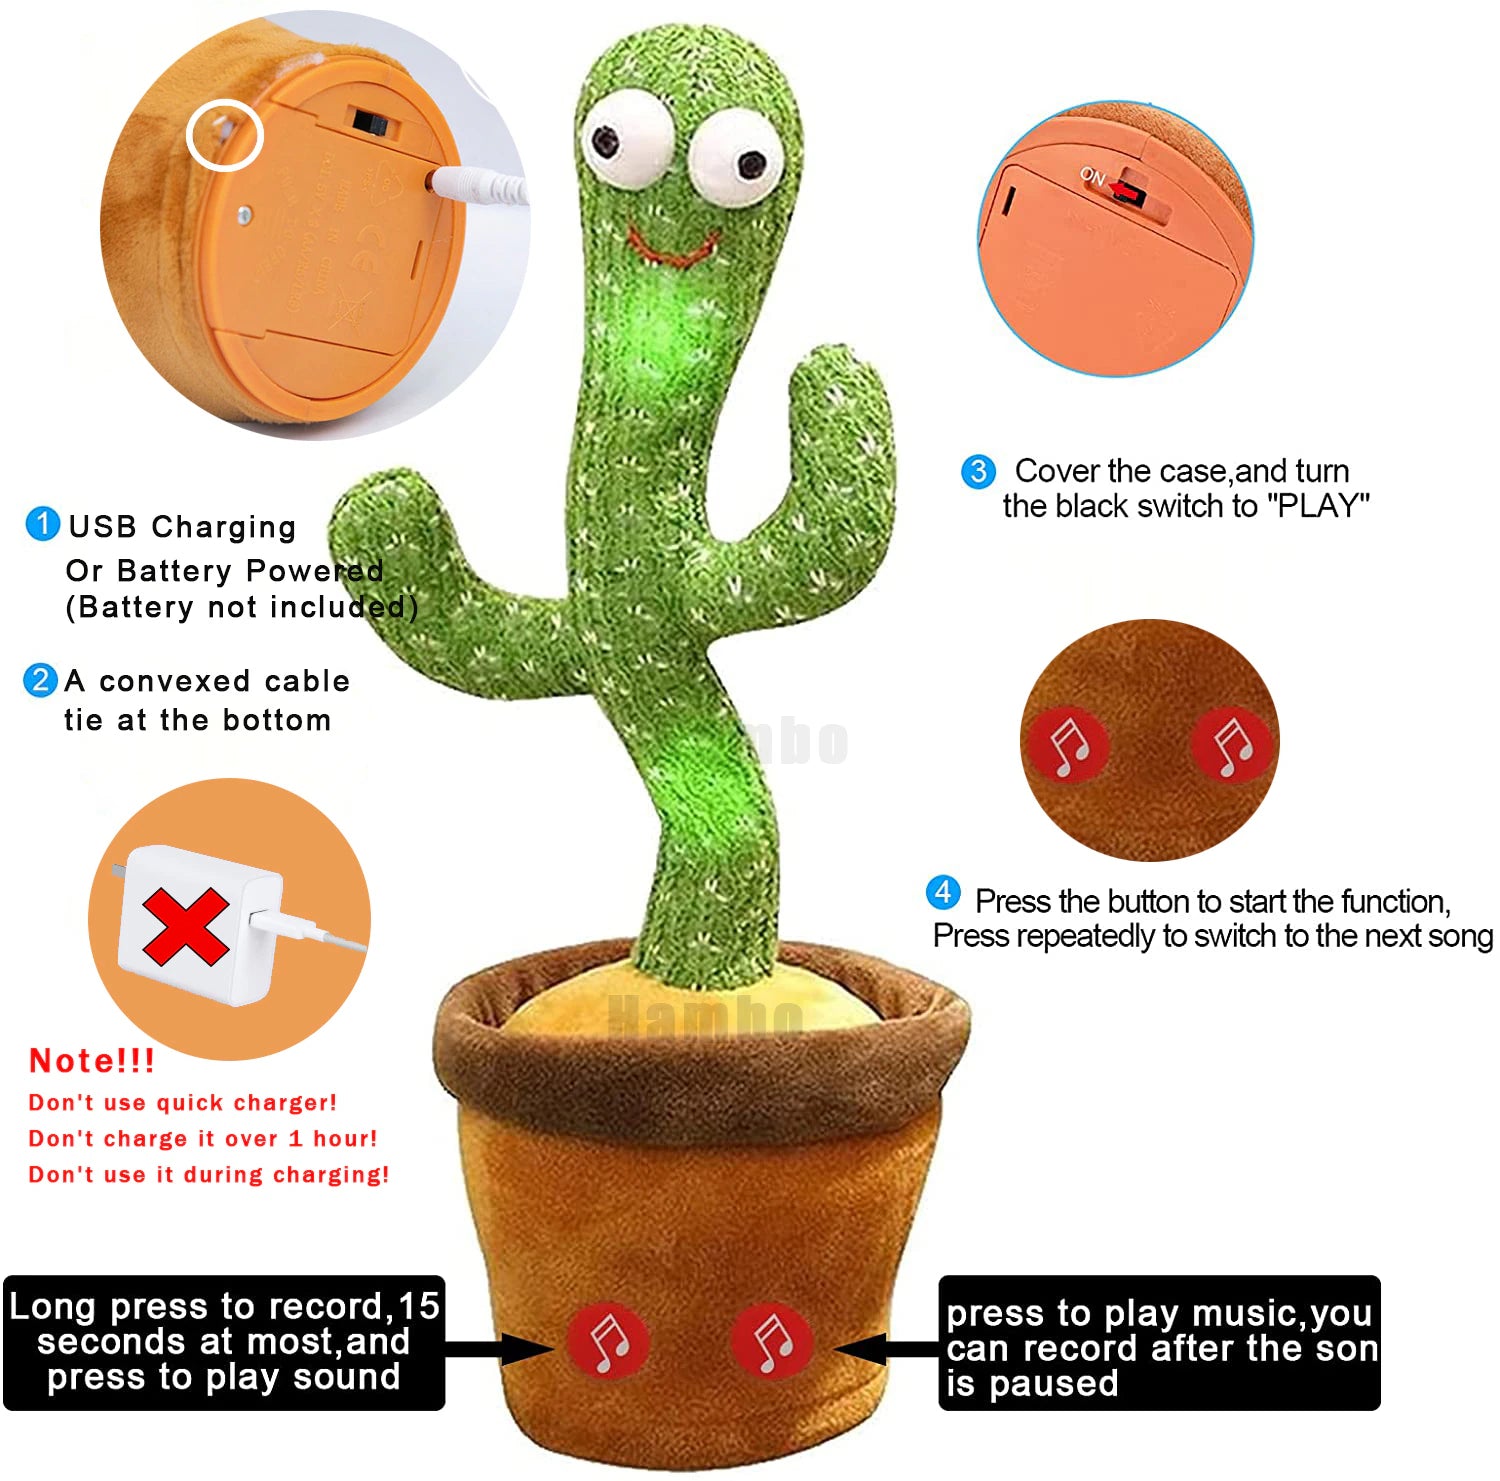 Lovely Talking Toy Dancing Cactus